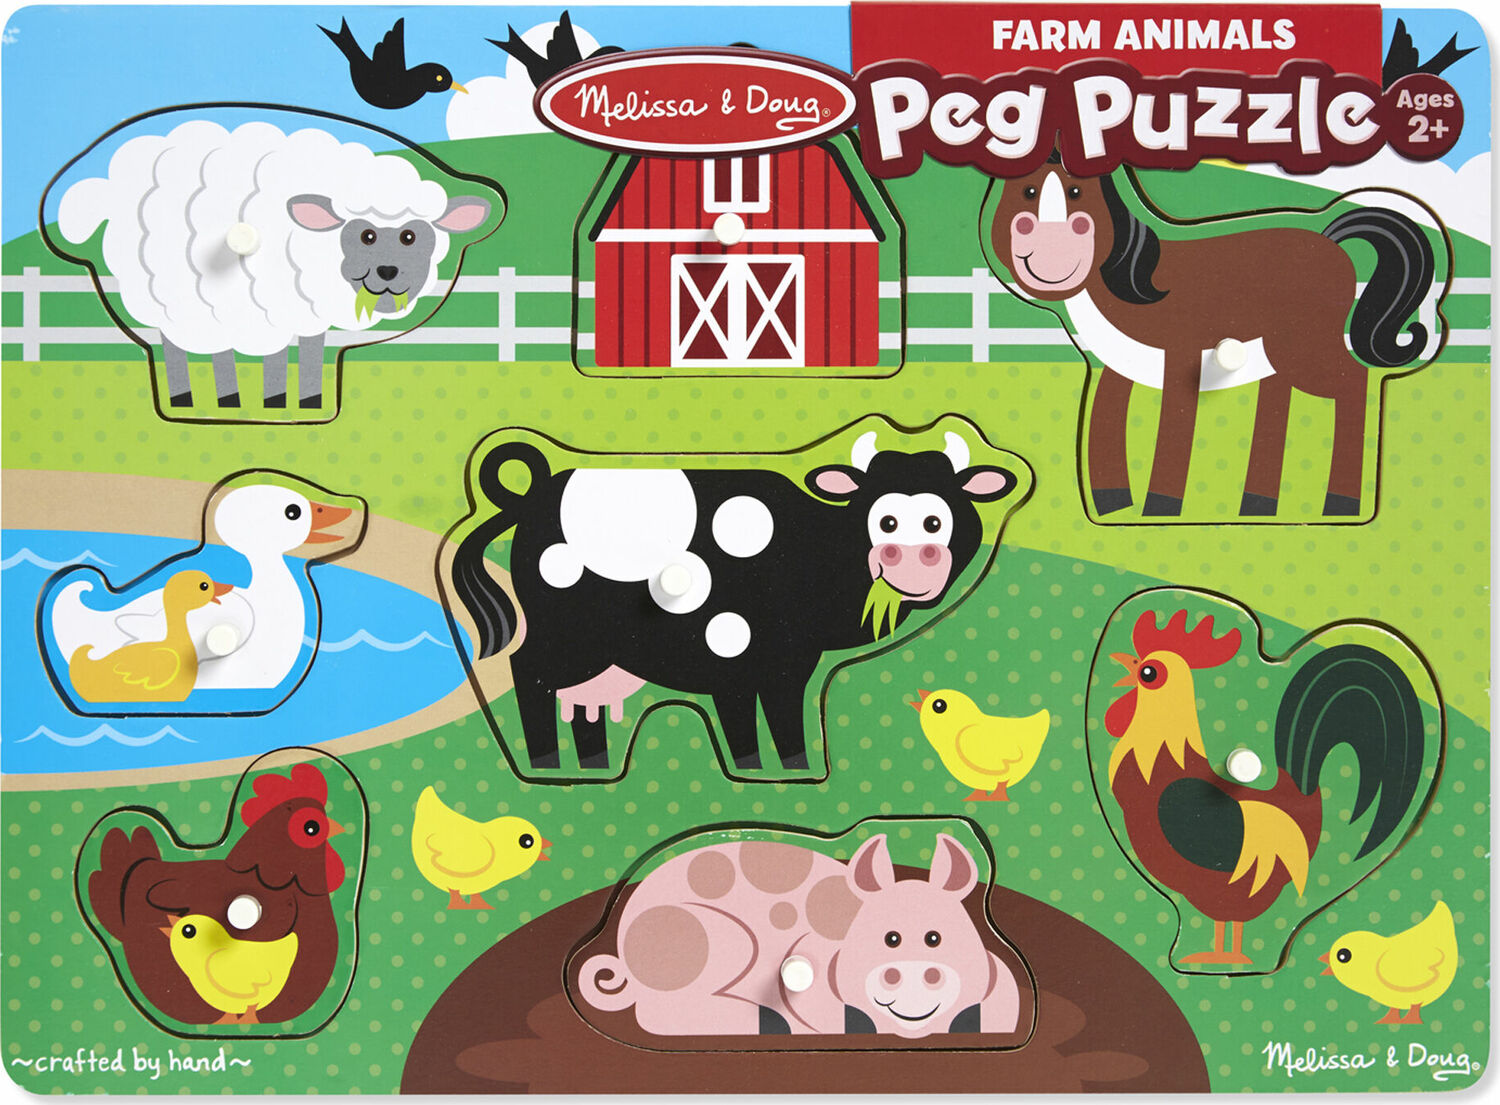 Farm Animal Figures – Toys 2 Discover